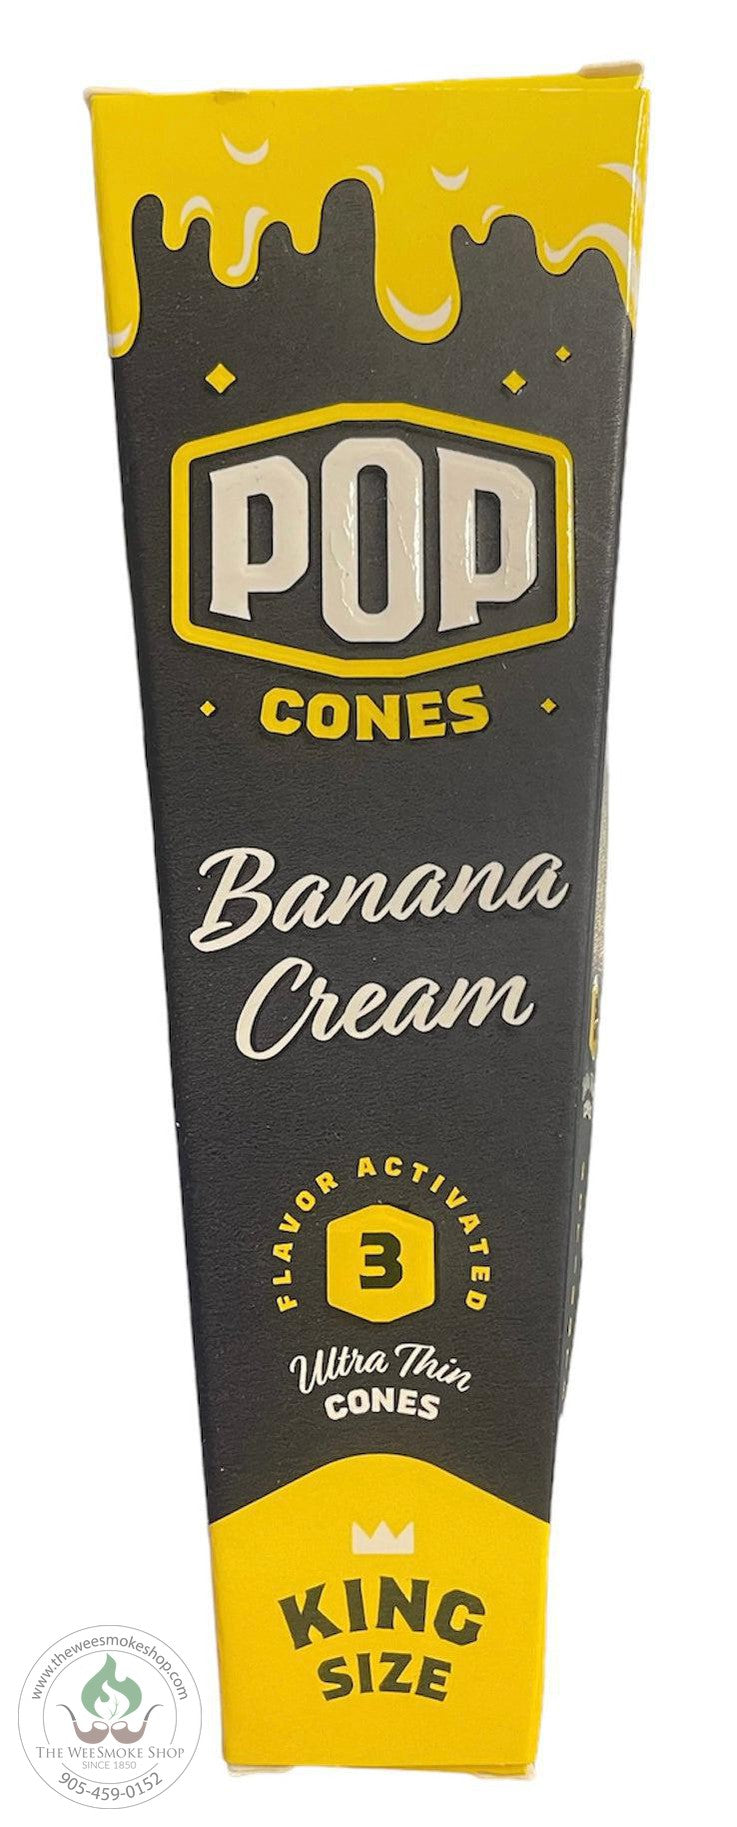 king size banana cream pop cones - The Wee Smoke Shop